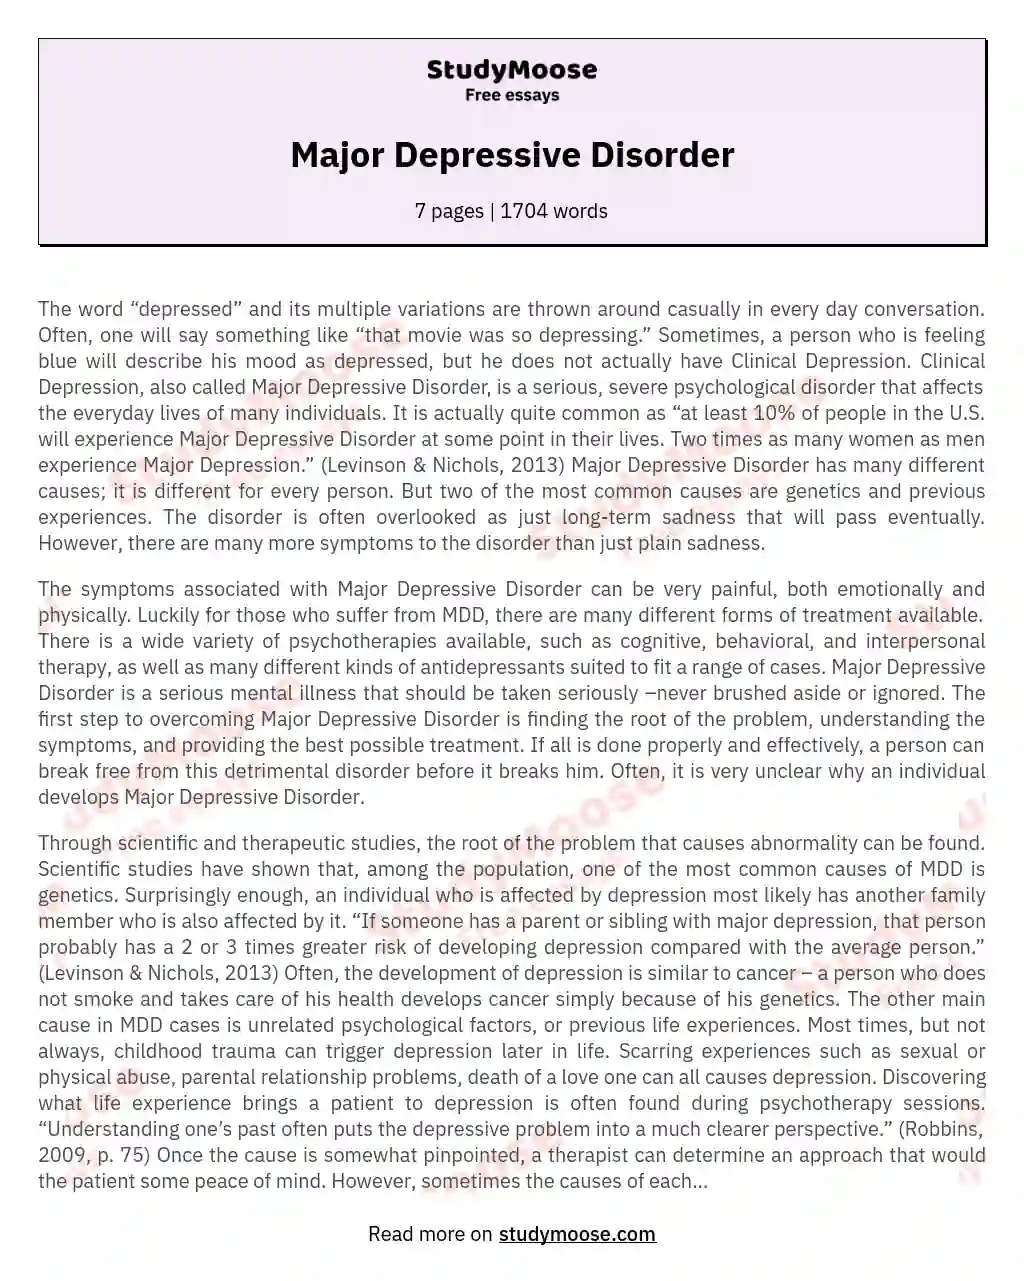 Major Depressive Disorder essay